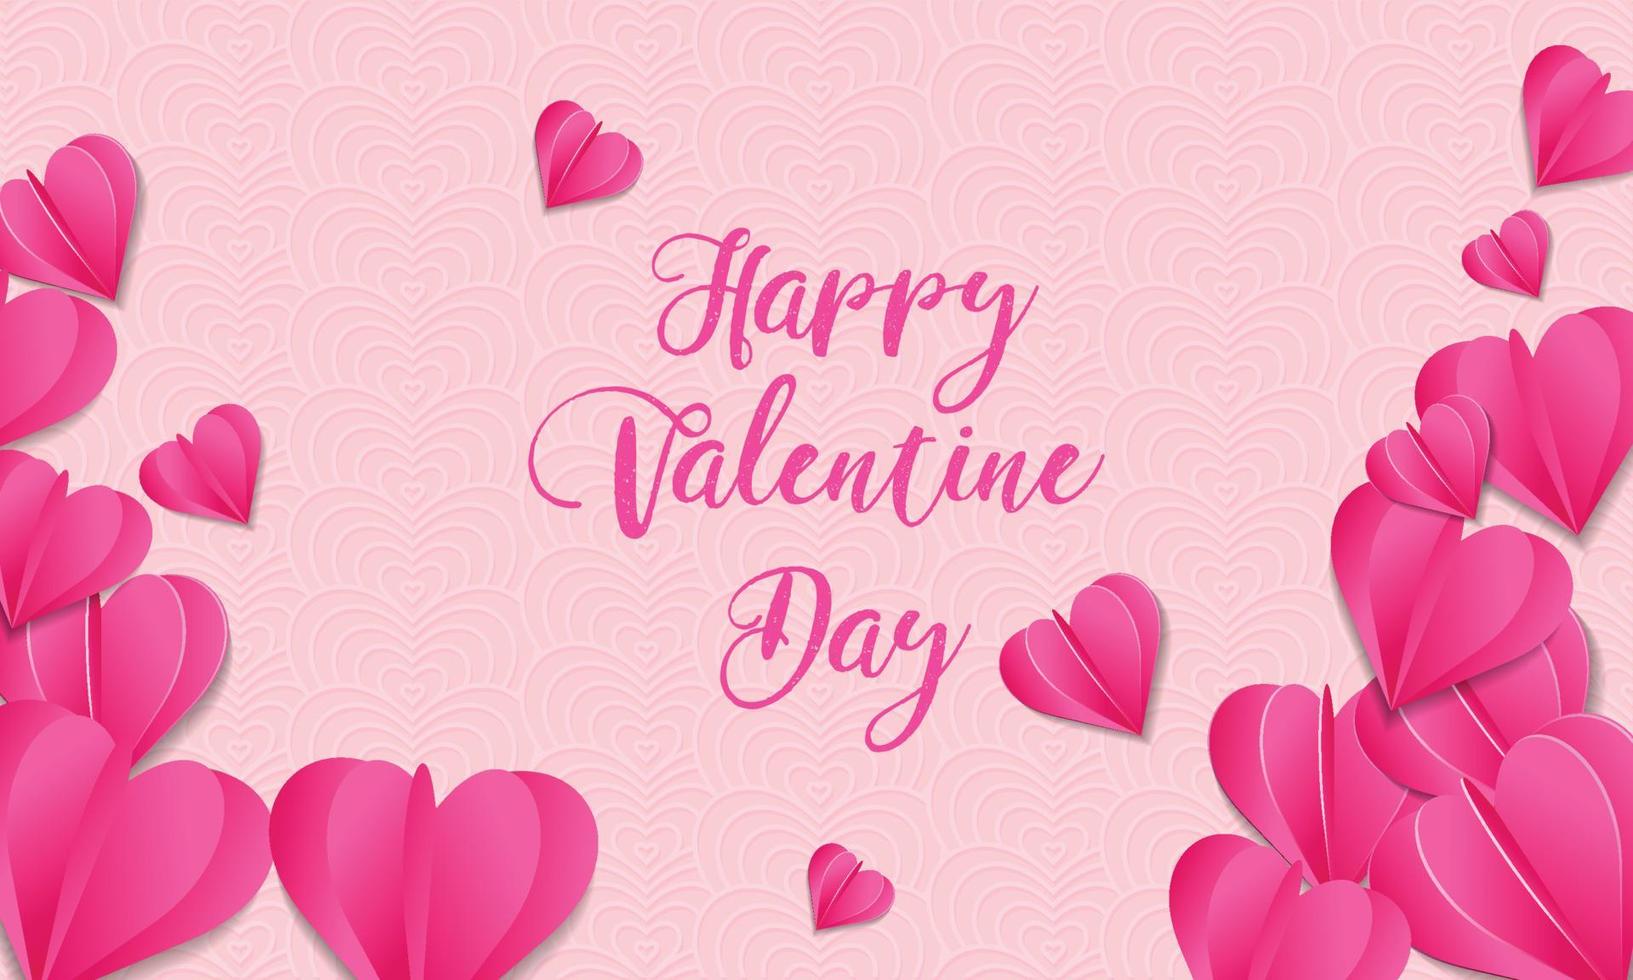 happy valentine day card,banner,background,vector illustration vector